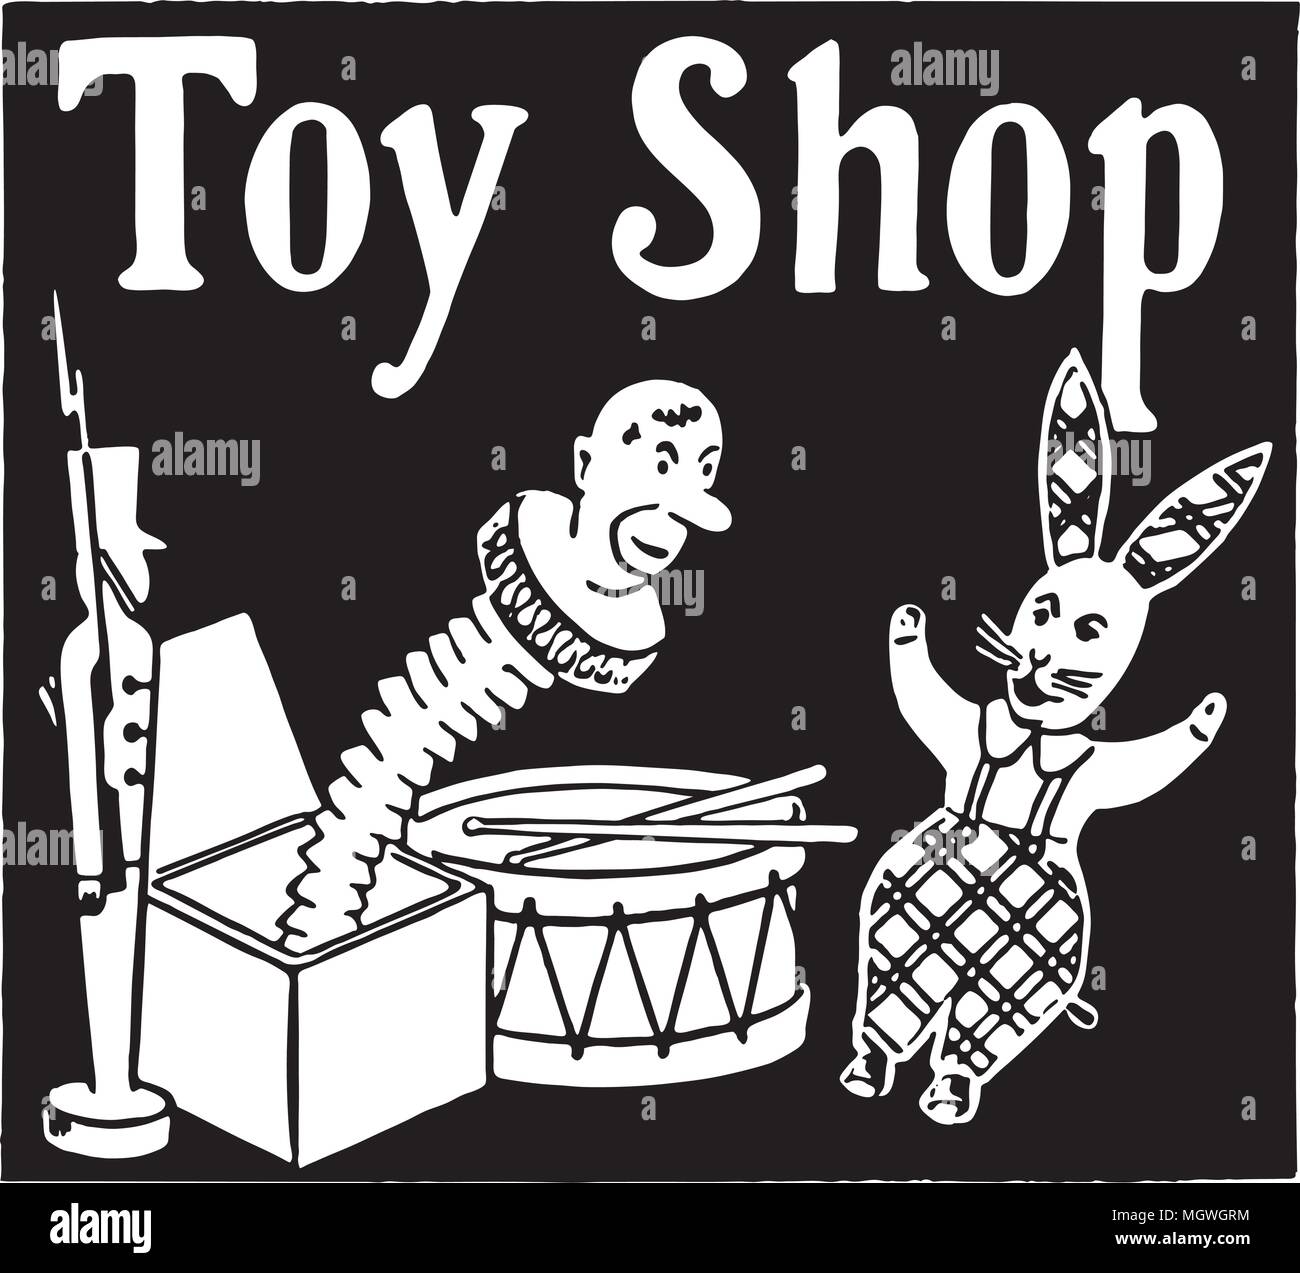 Toy Shop - Retro Ad Art Banner Stock Vector